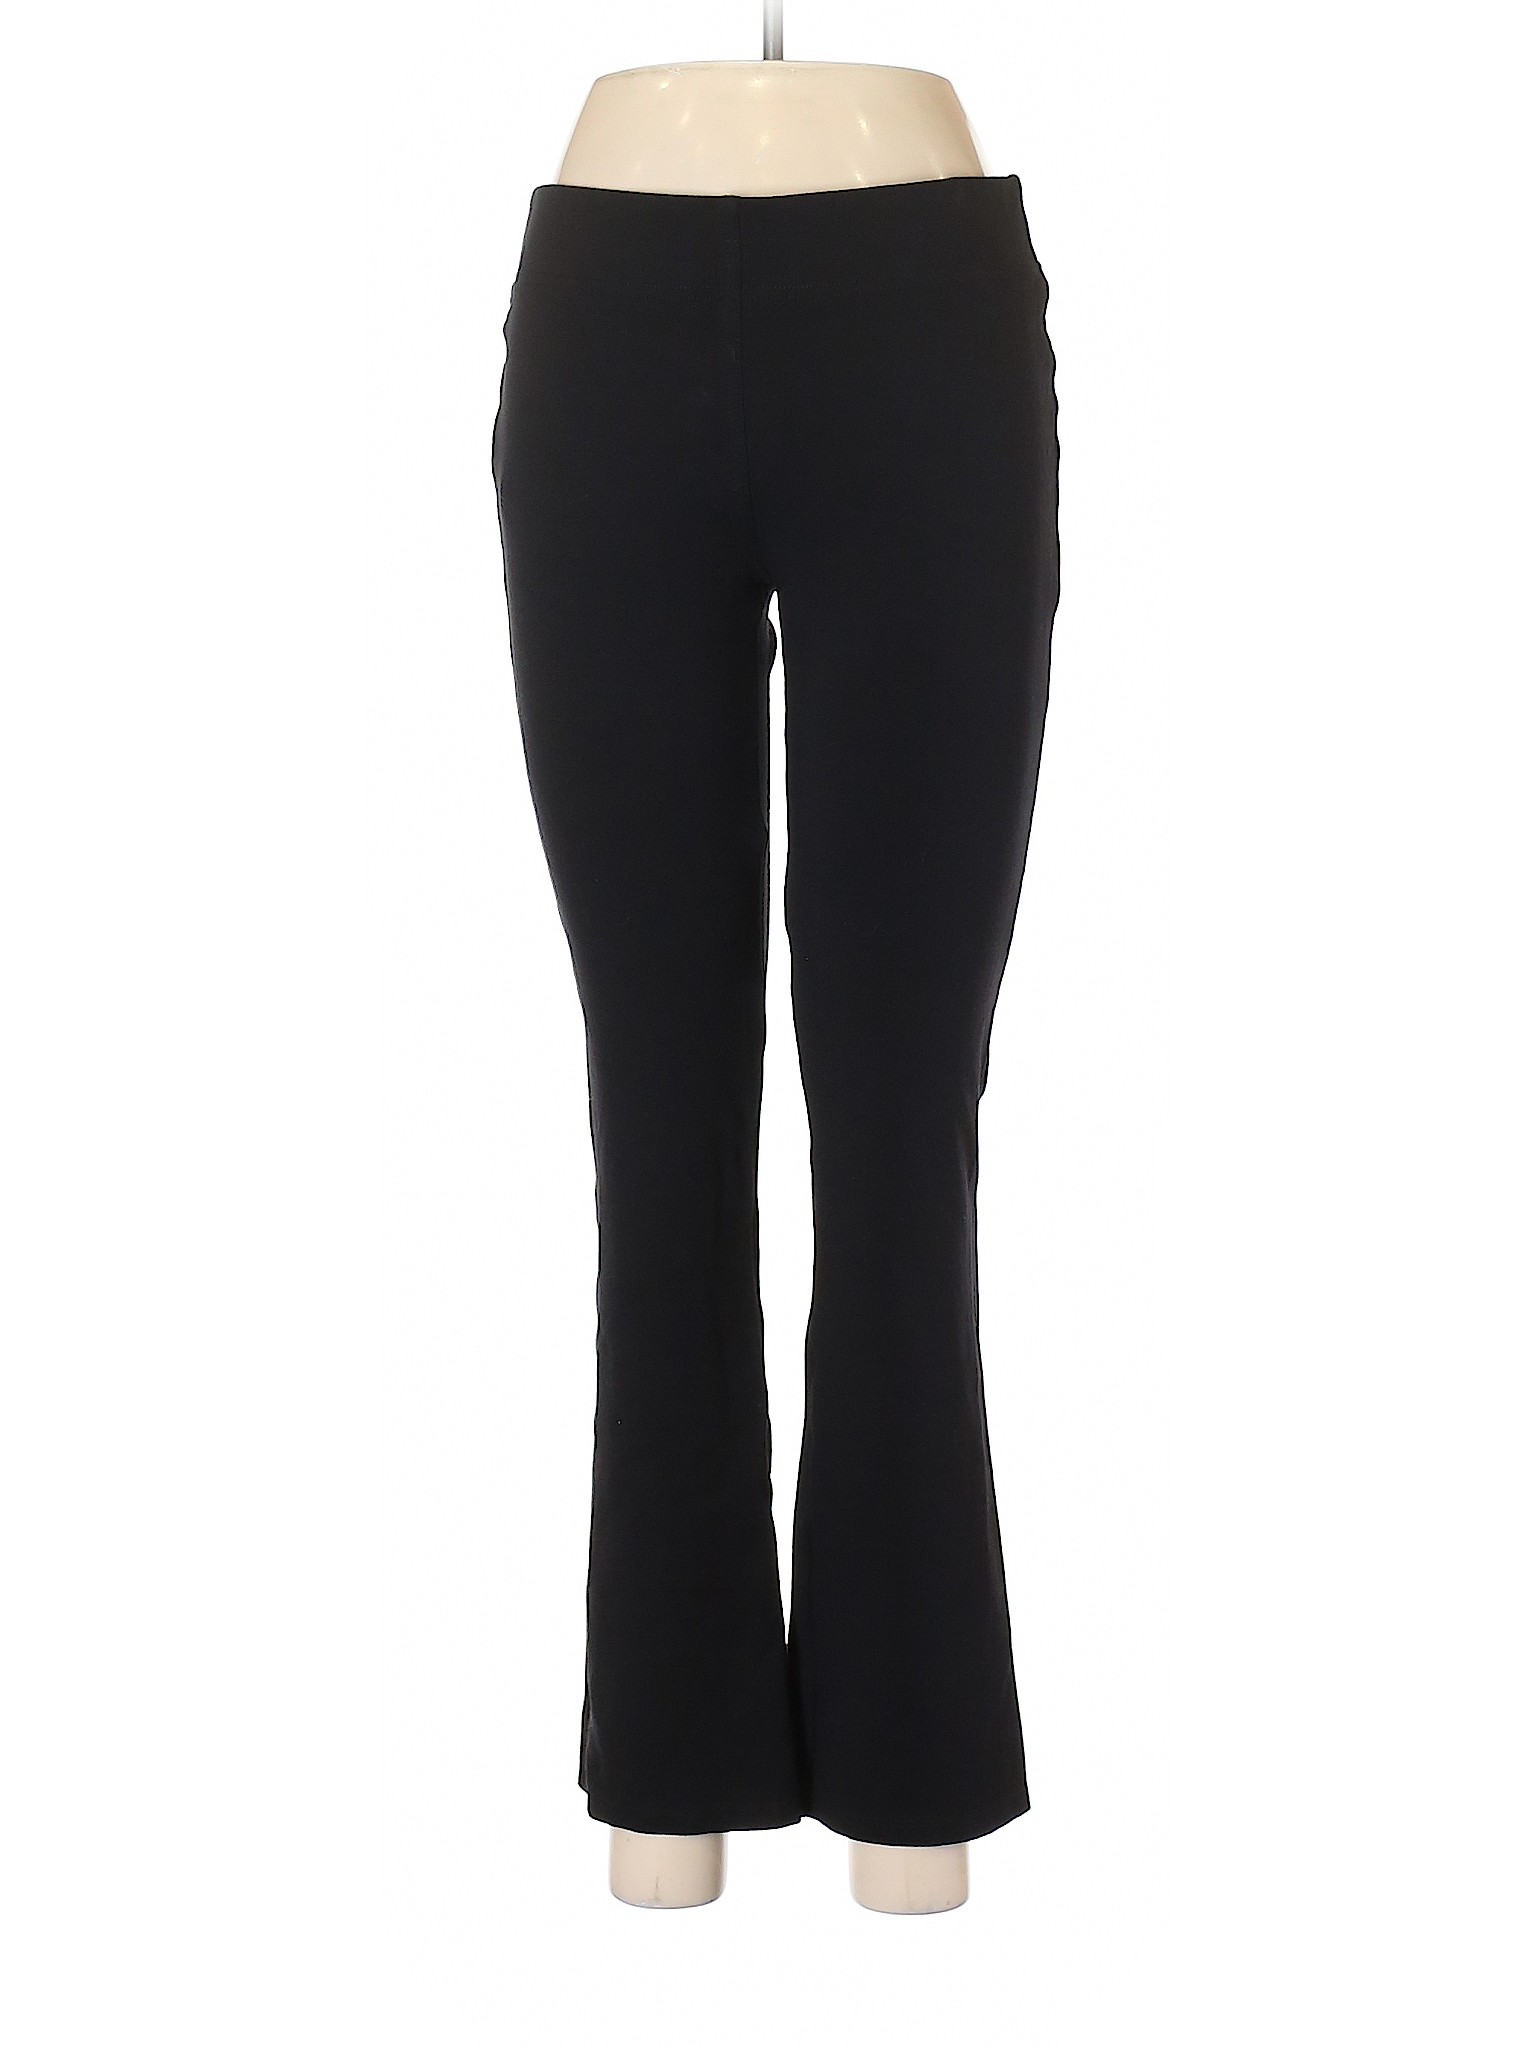 Ann Taylor LOFT Solid Black Casual Pants Size M - 88% off | thredUP